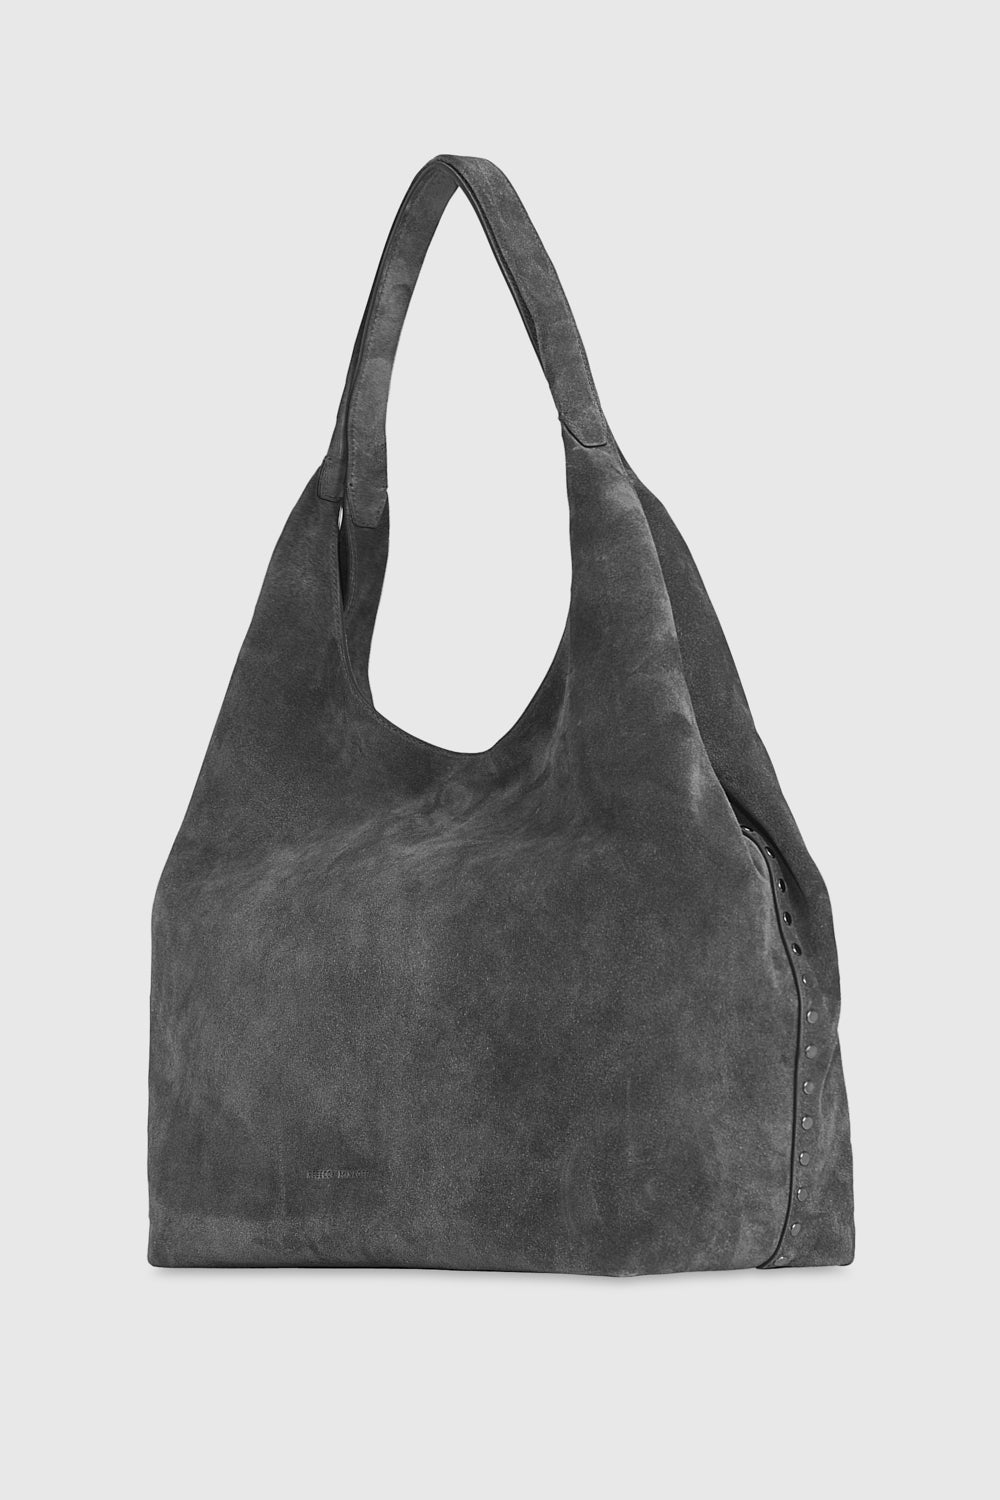  Rebecca Minkoff Women's Darren Tote Bag : Clothing